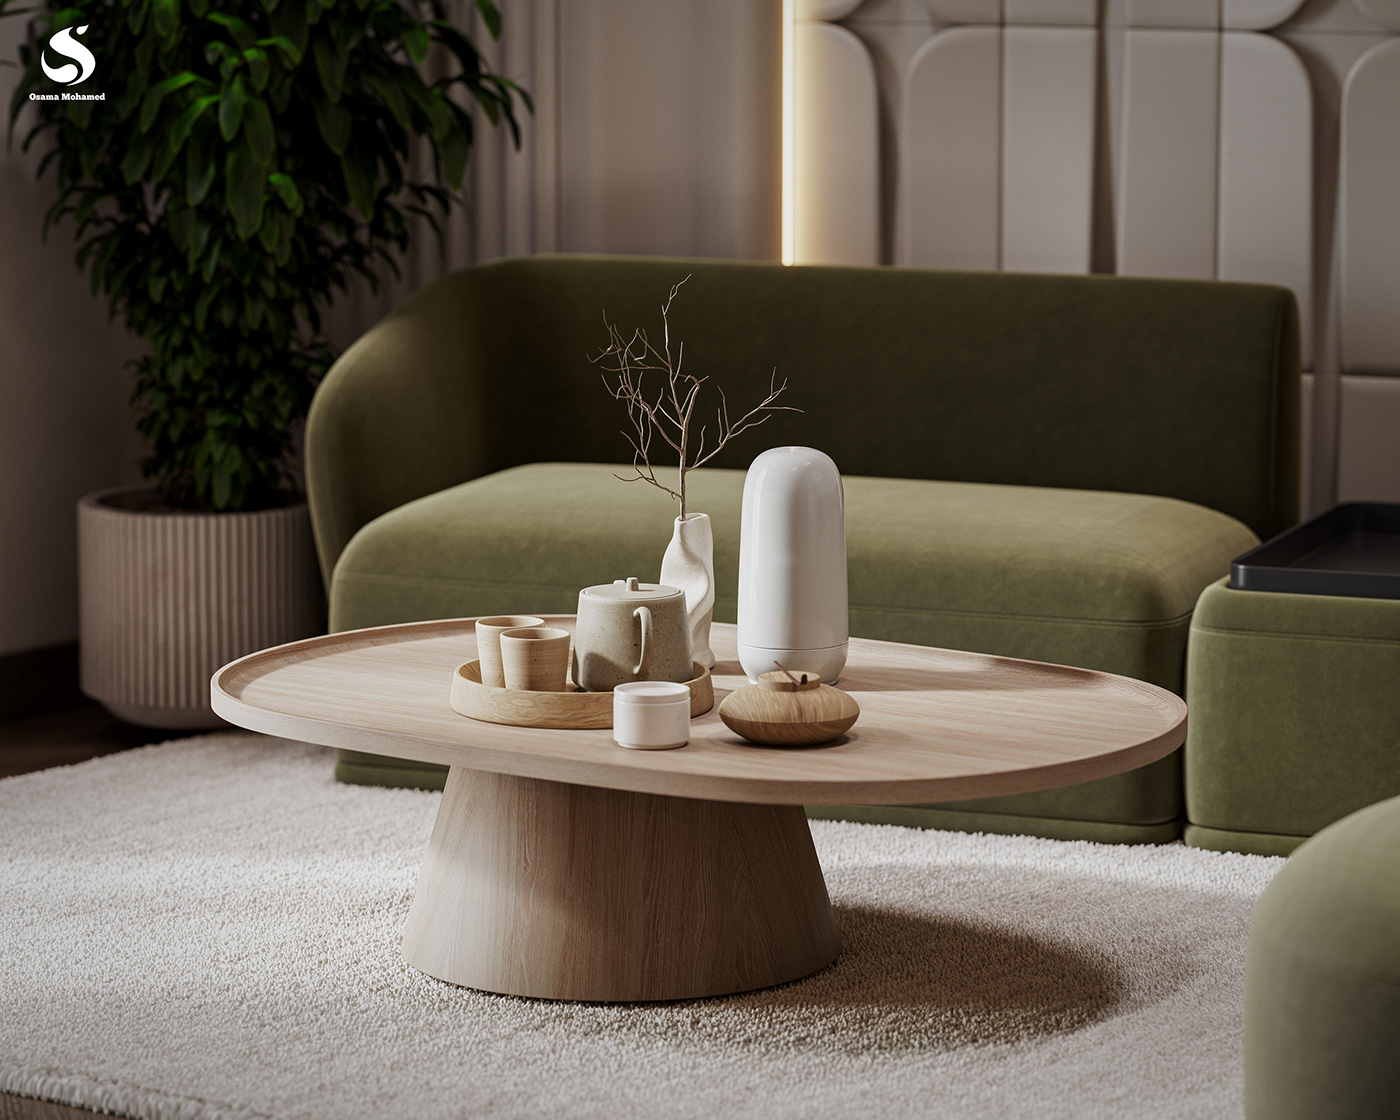 table furniture wood interior design  architecture Render visualization modern design 3ds max